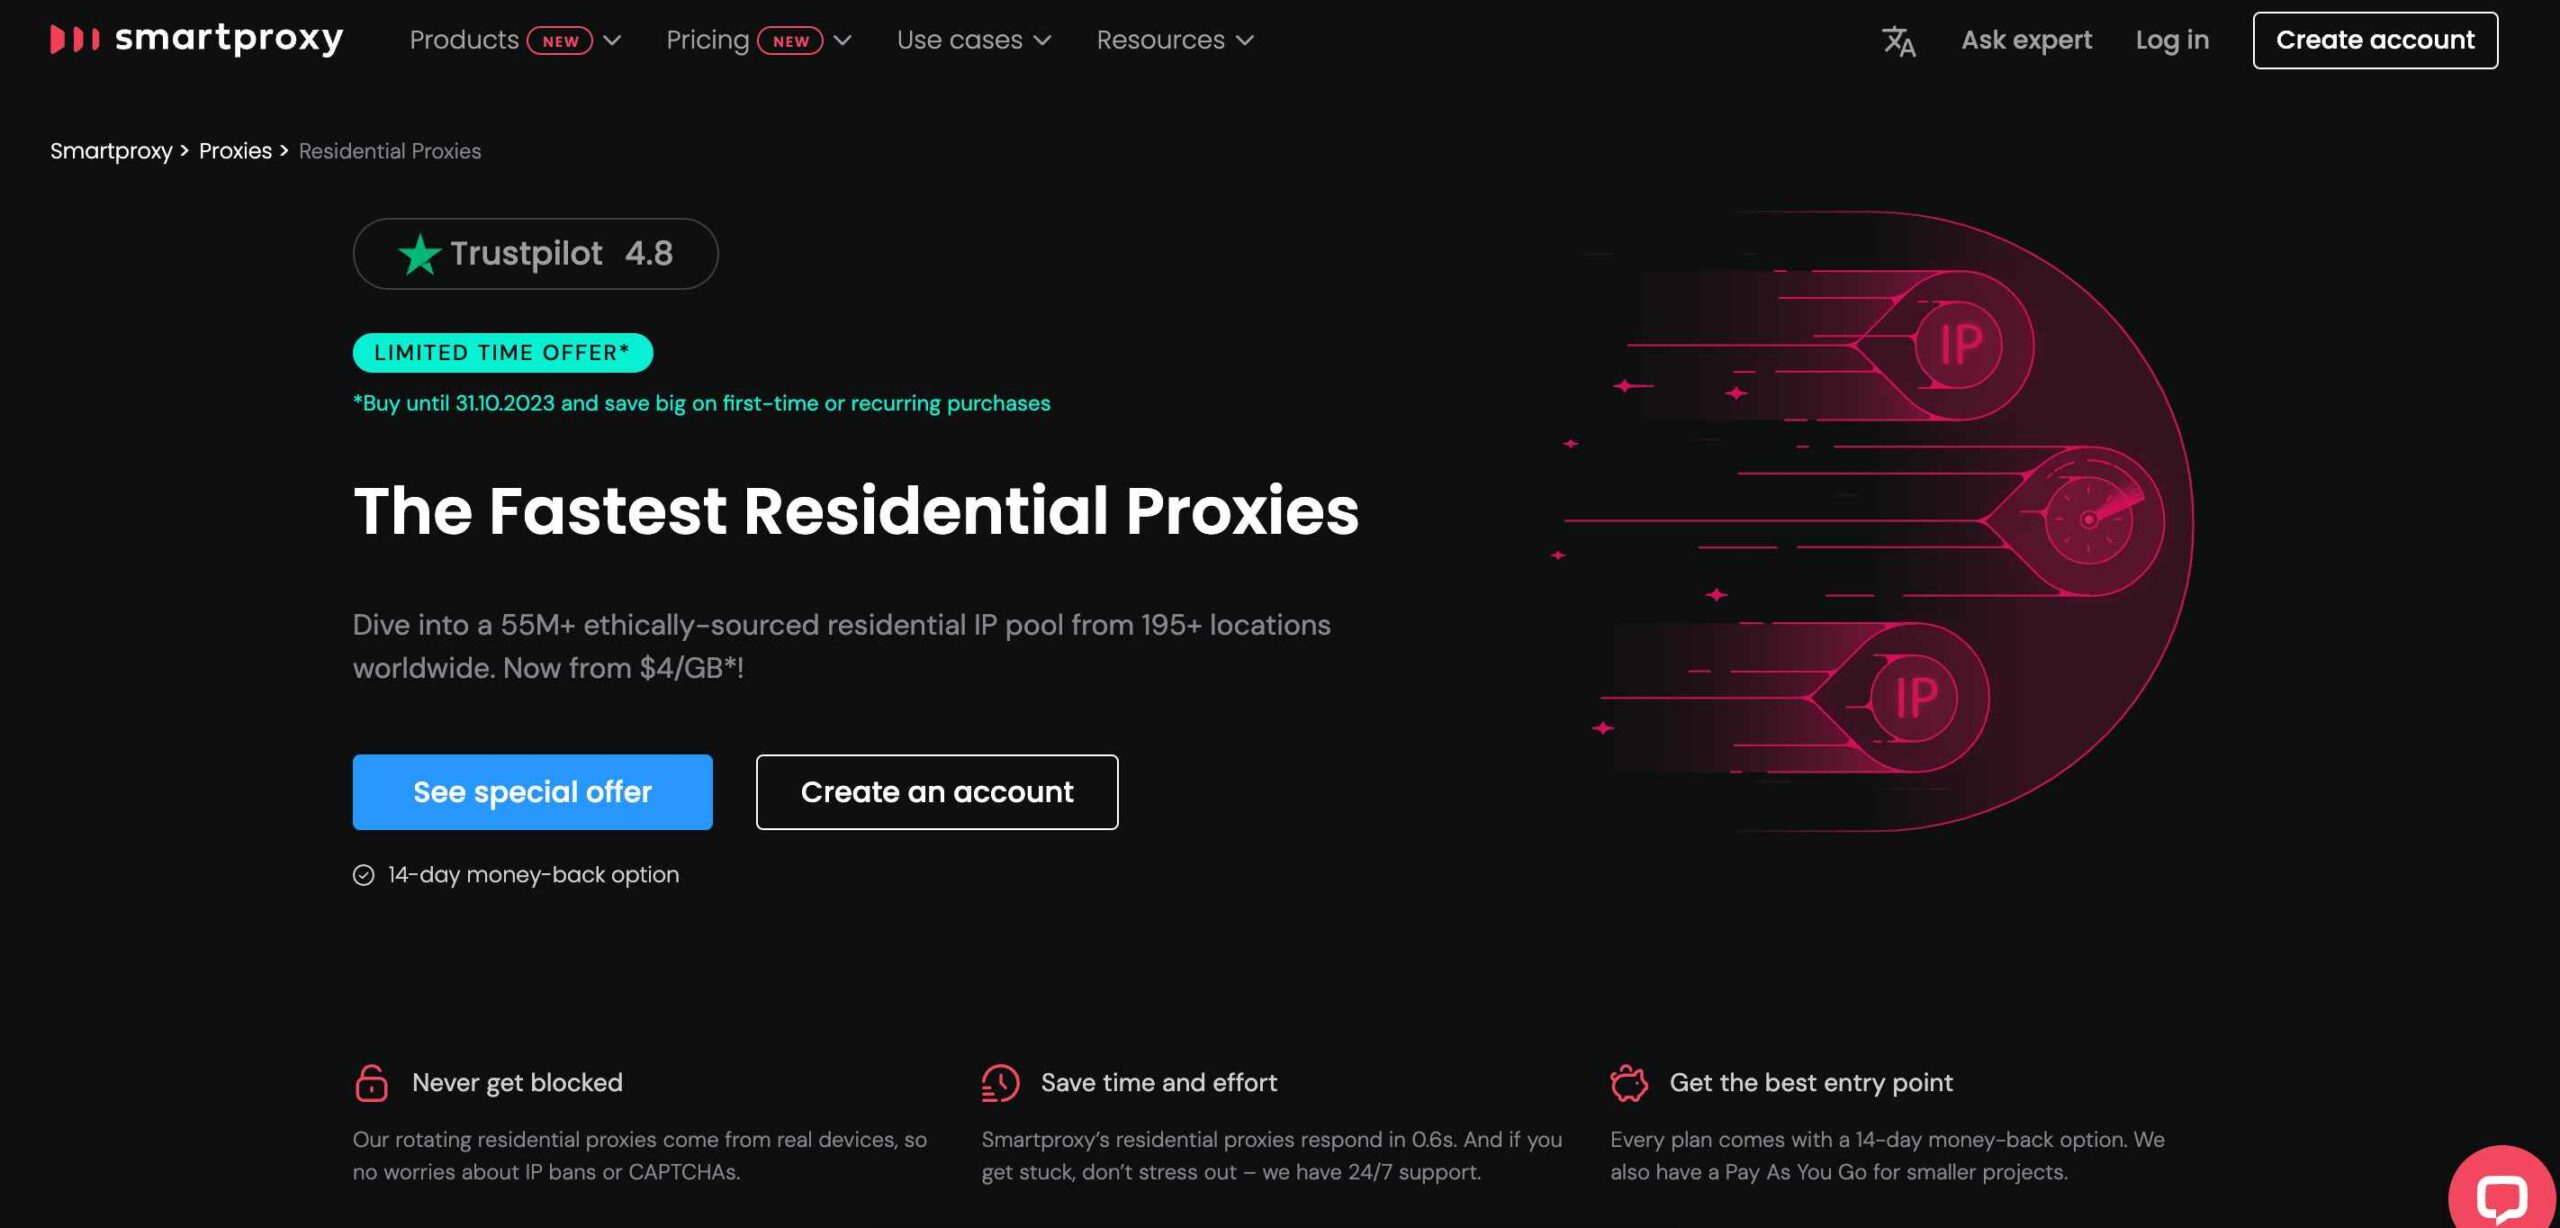 Smartproxy Residential Proxies